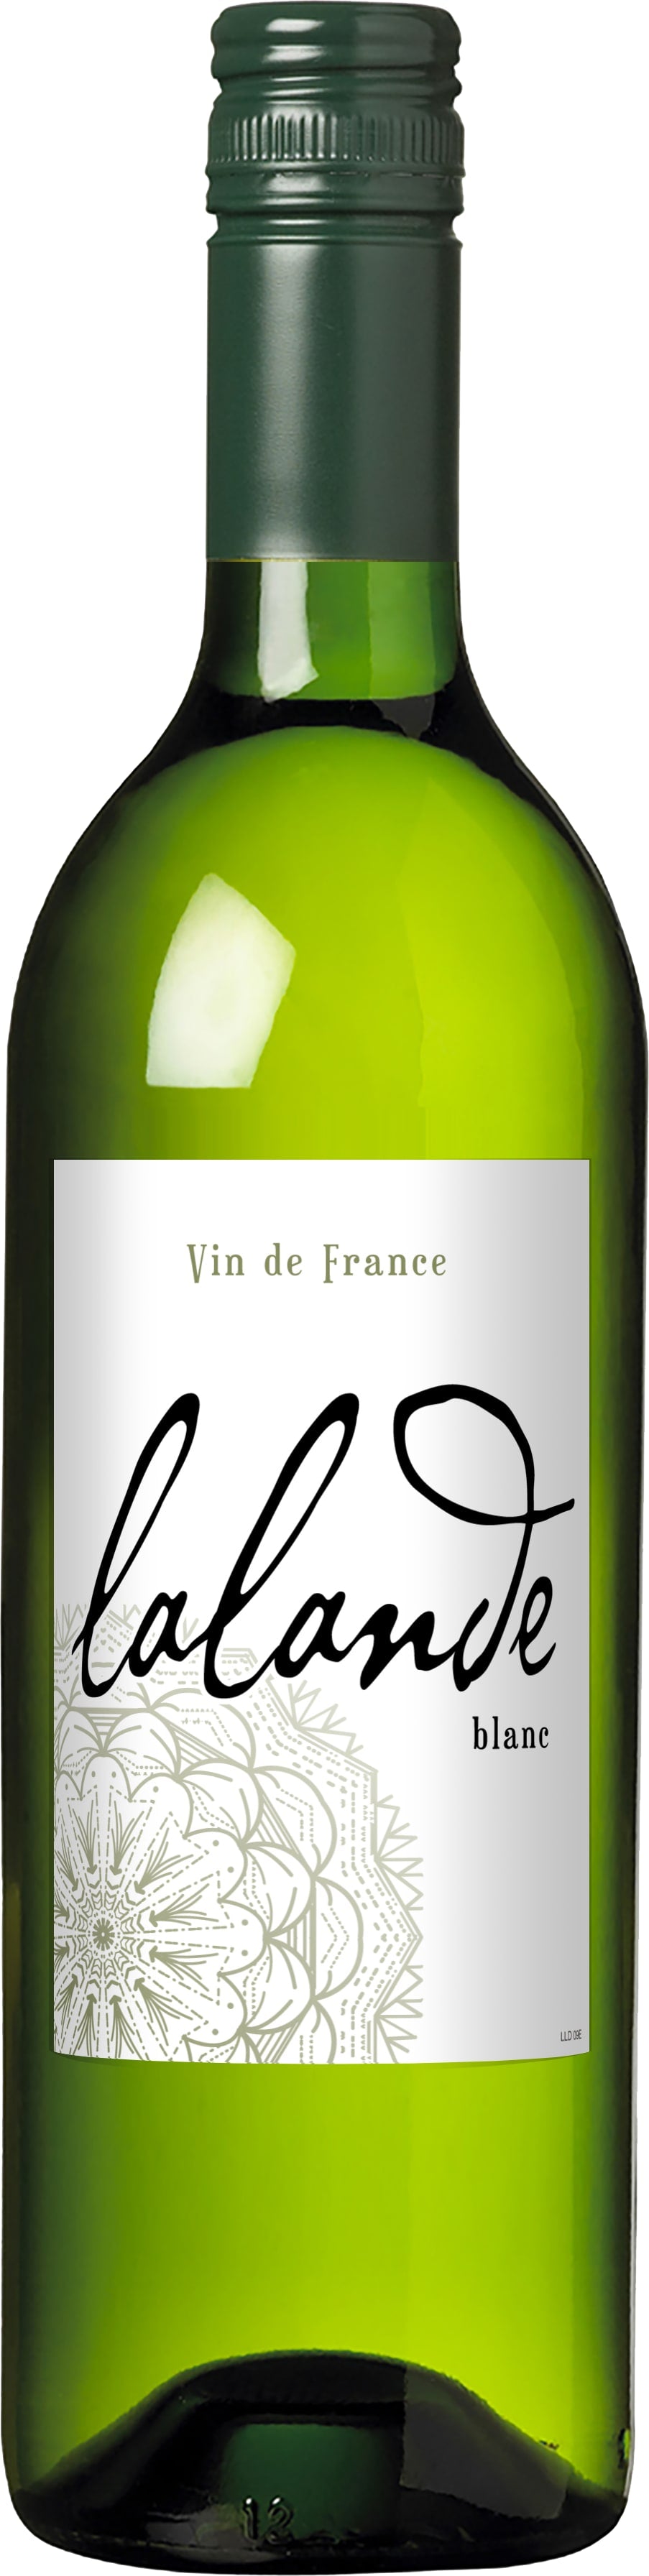 La Lande Vin de France 2022 75cl - Buy La Lande Wines from GREAT WINES DIRECT wine shop